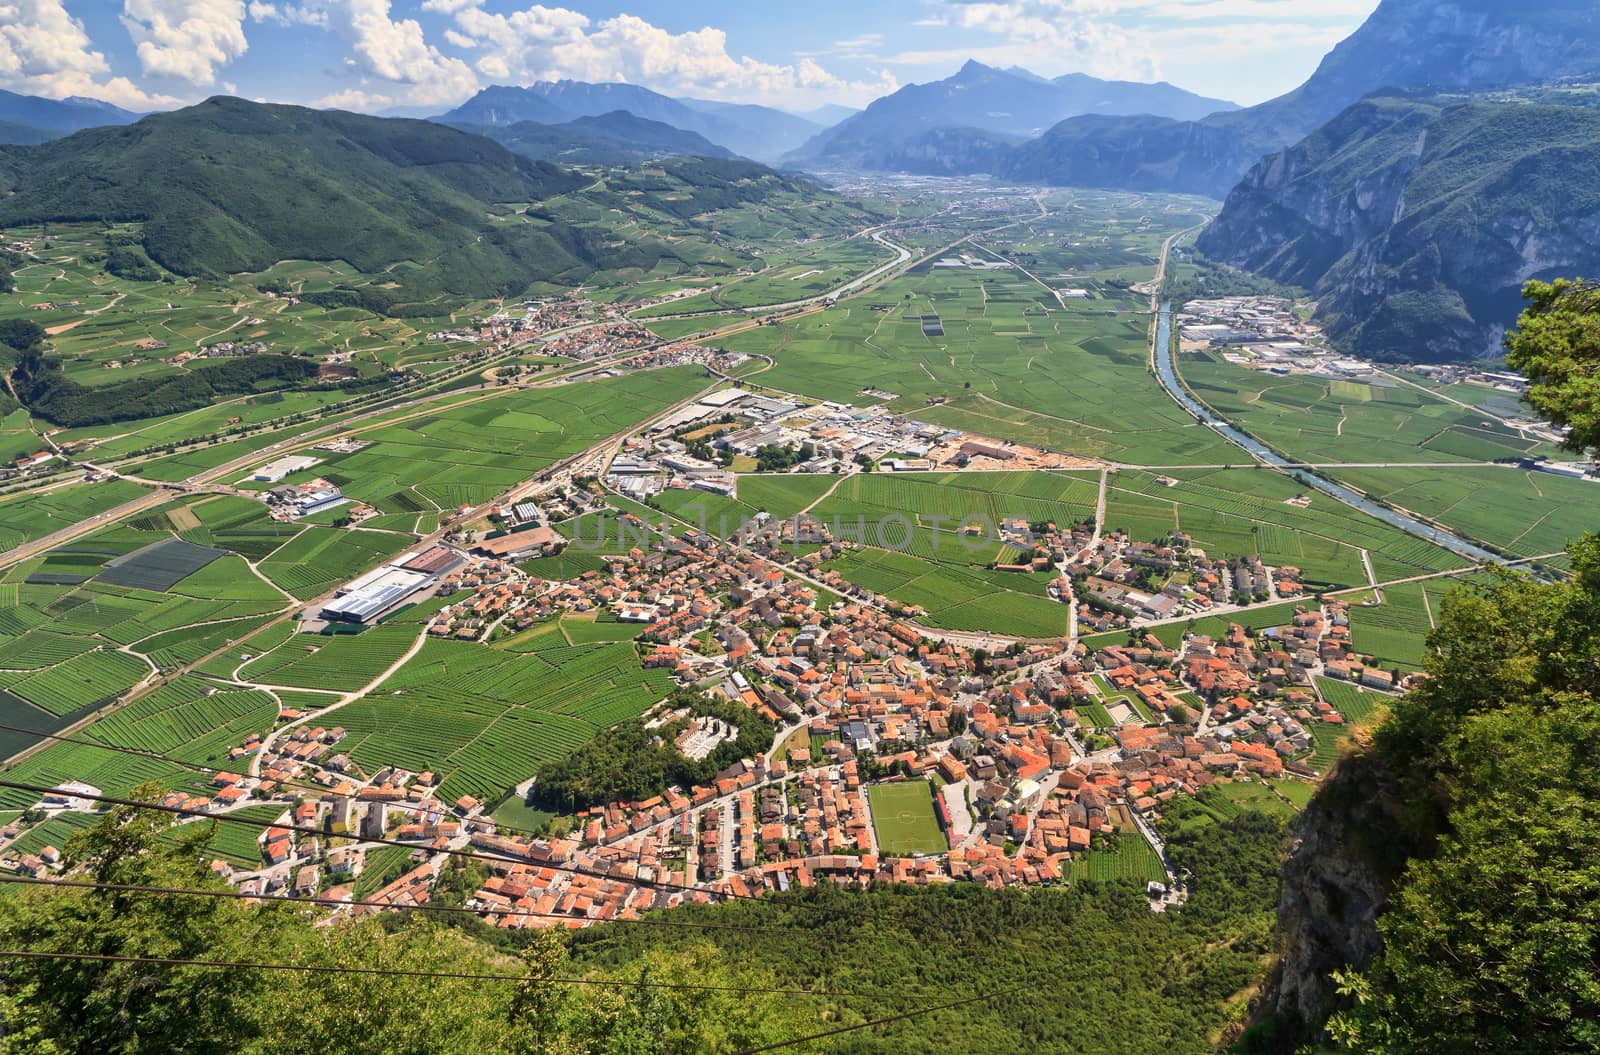 Overview of Adige Valley with Mezzacorona village, Trentino, Italy